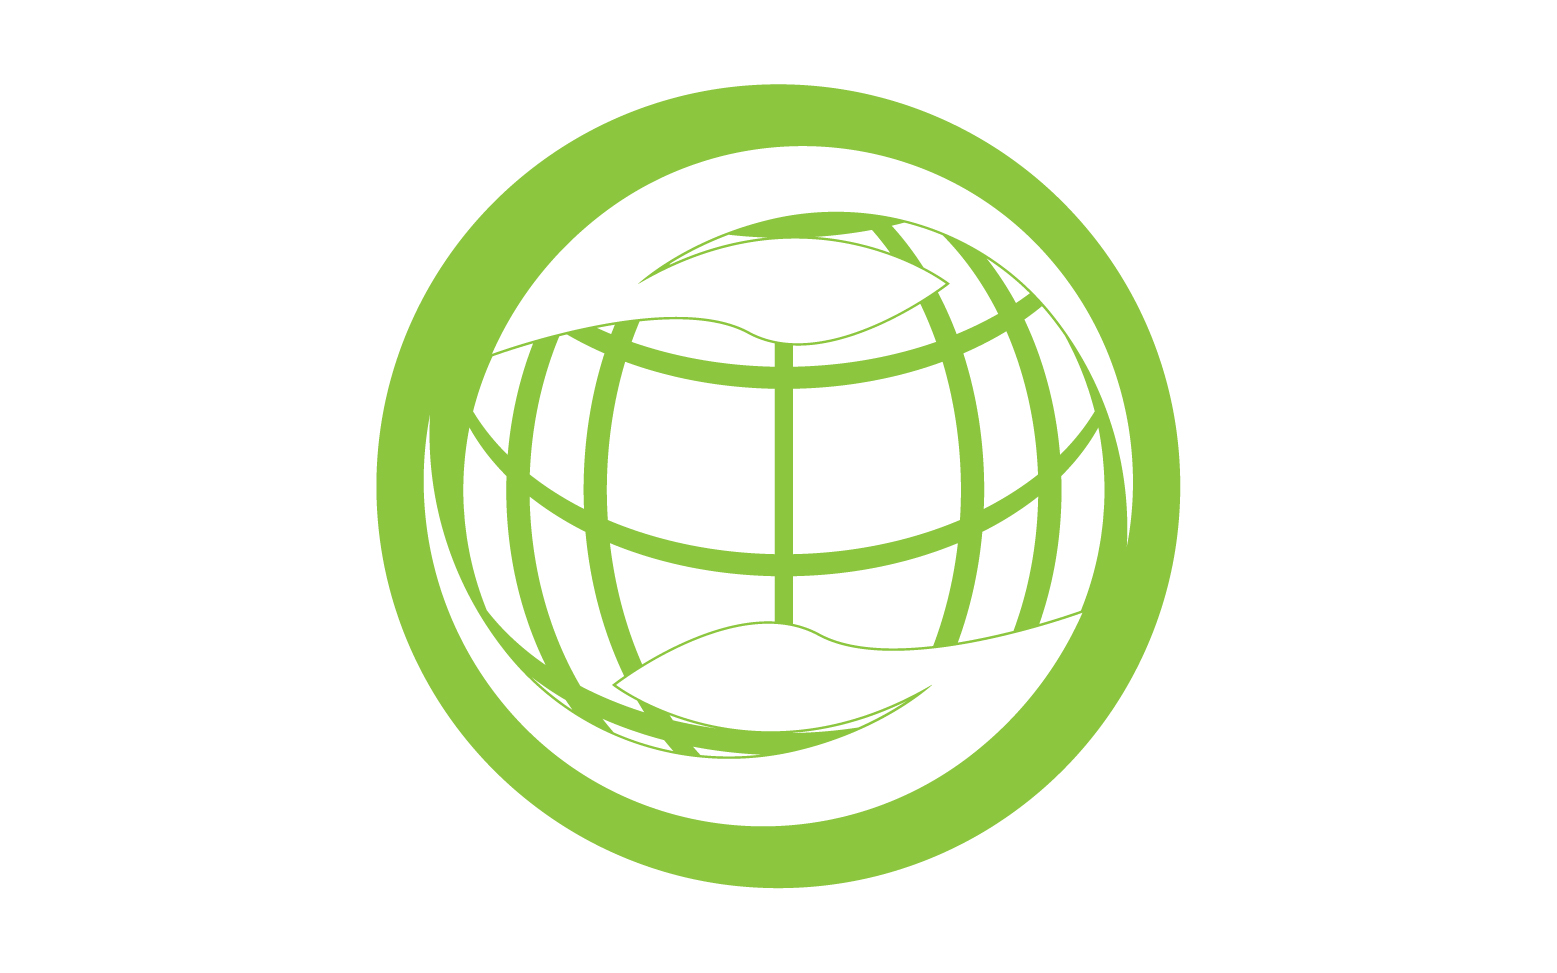 World go green save logo version 2